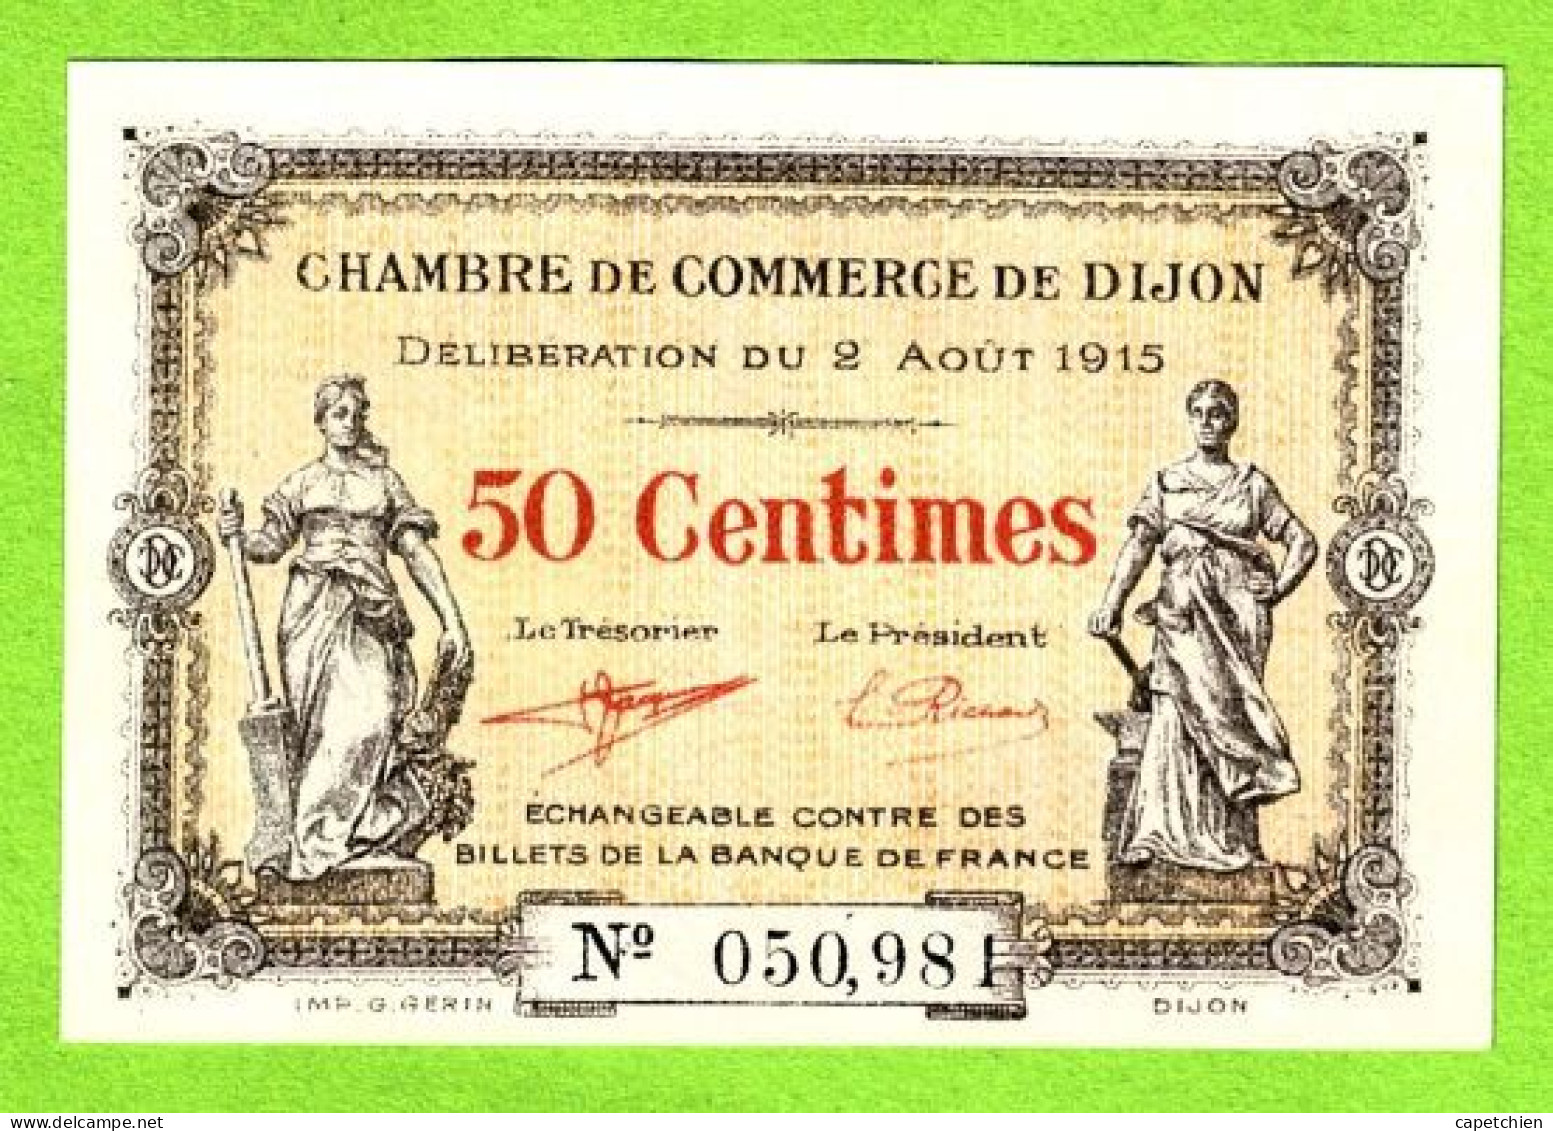 FRANCE / CHAMBRE De COMMERCE De DIJON/ 50 CENT. / 2 AOUT 1915 / N° 050,98 / SERIE - Handelskammer